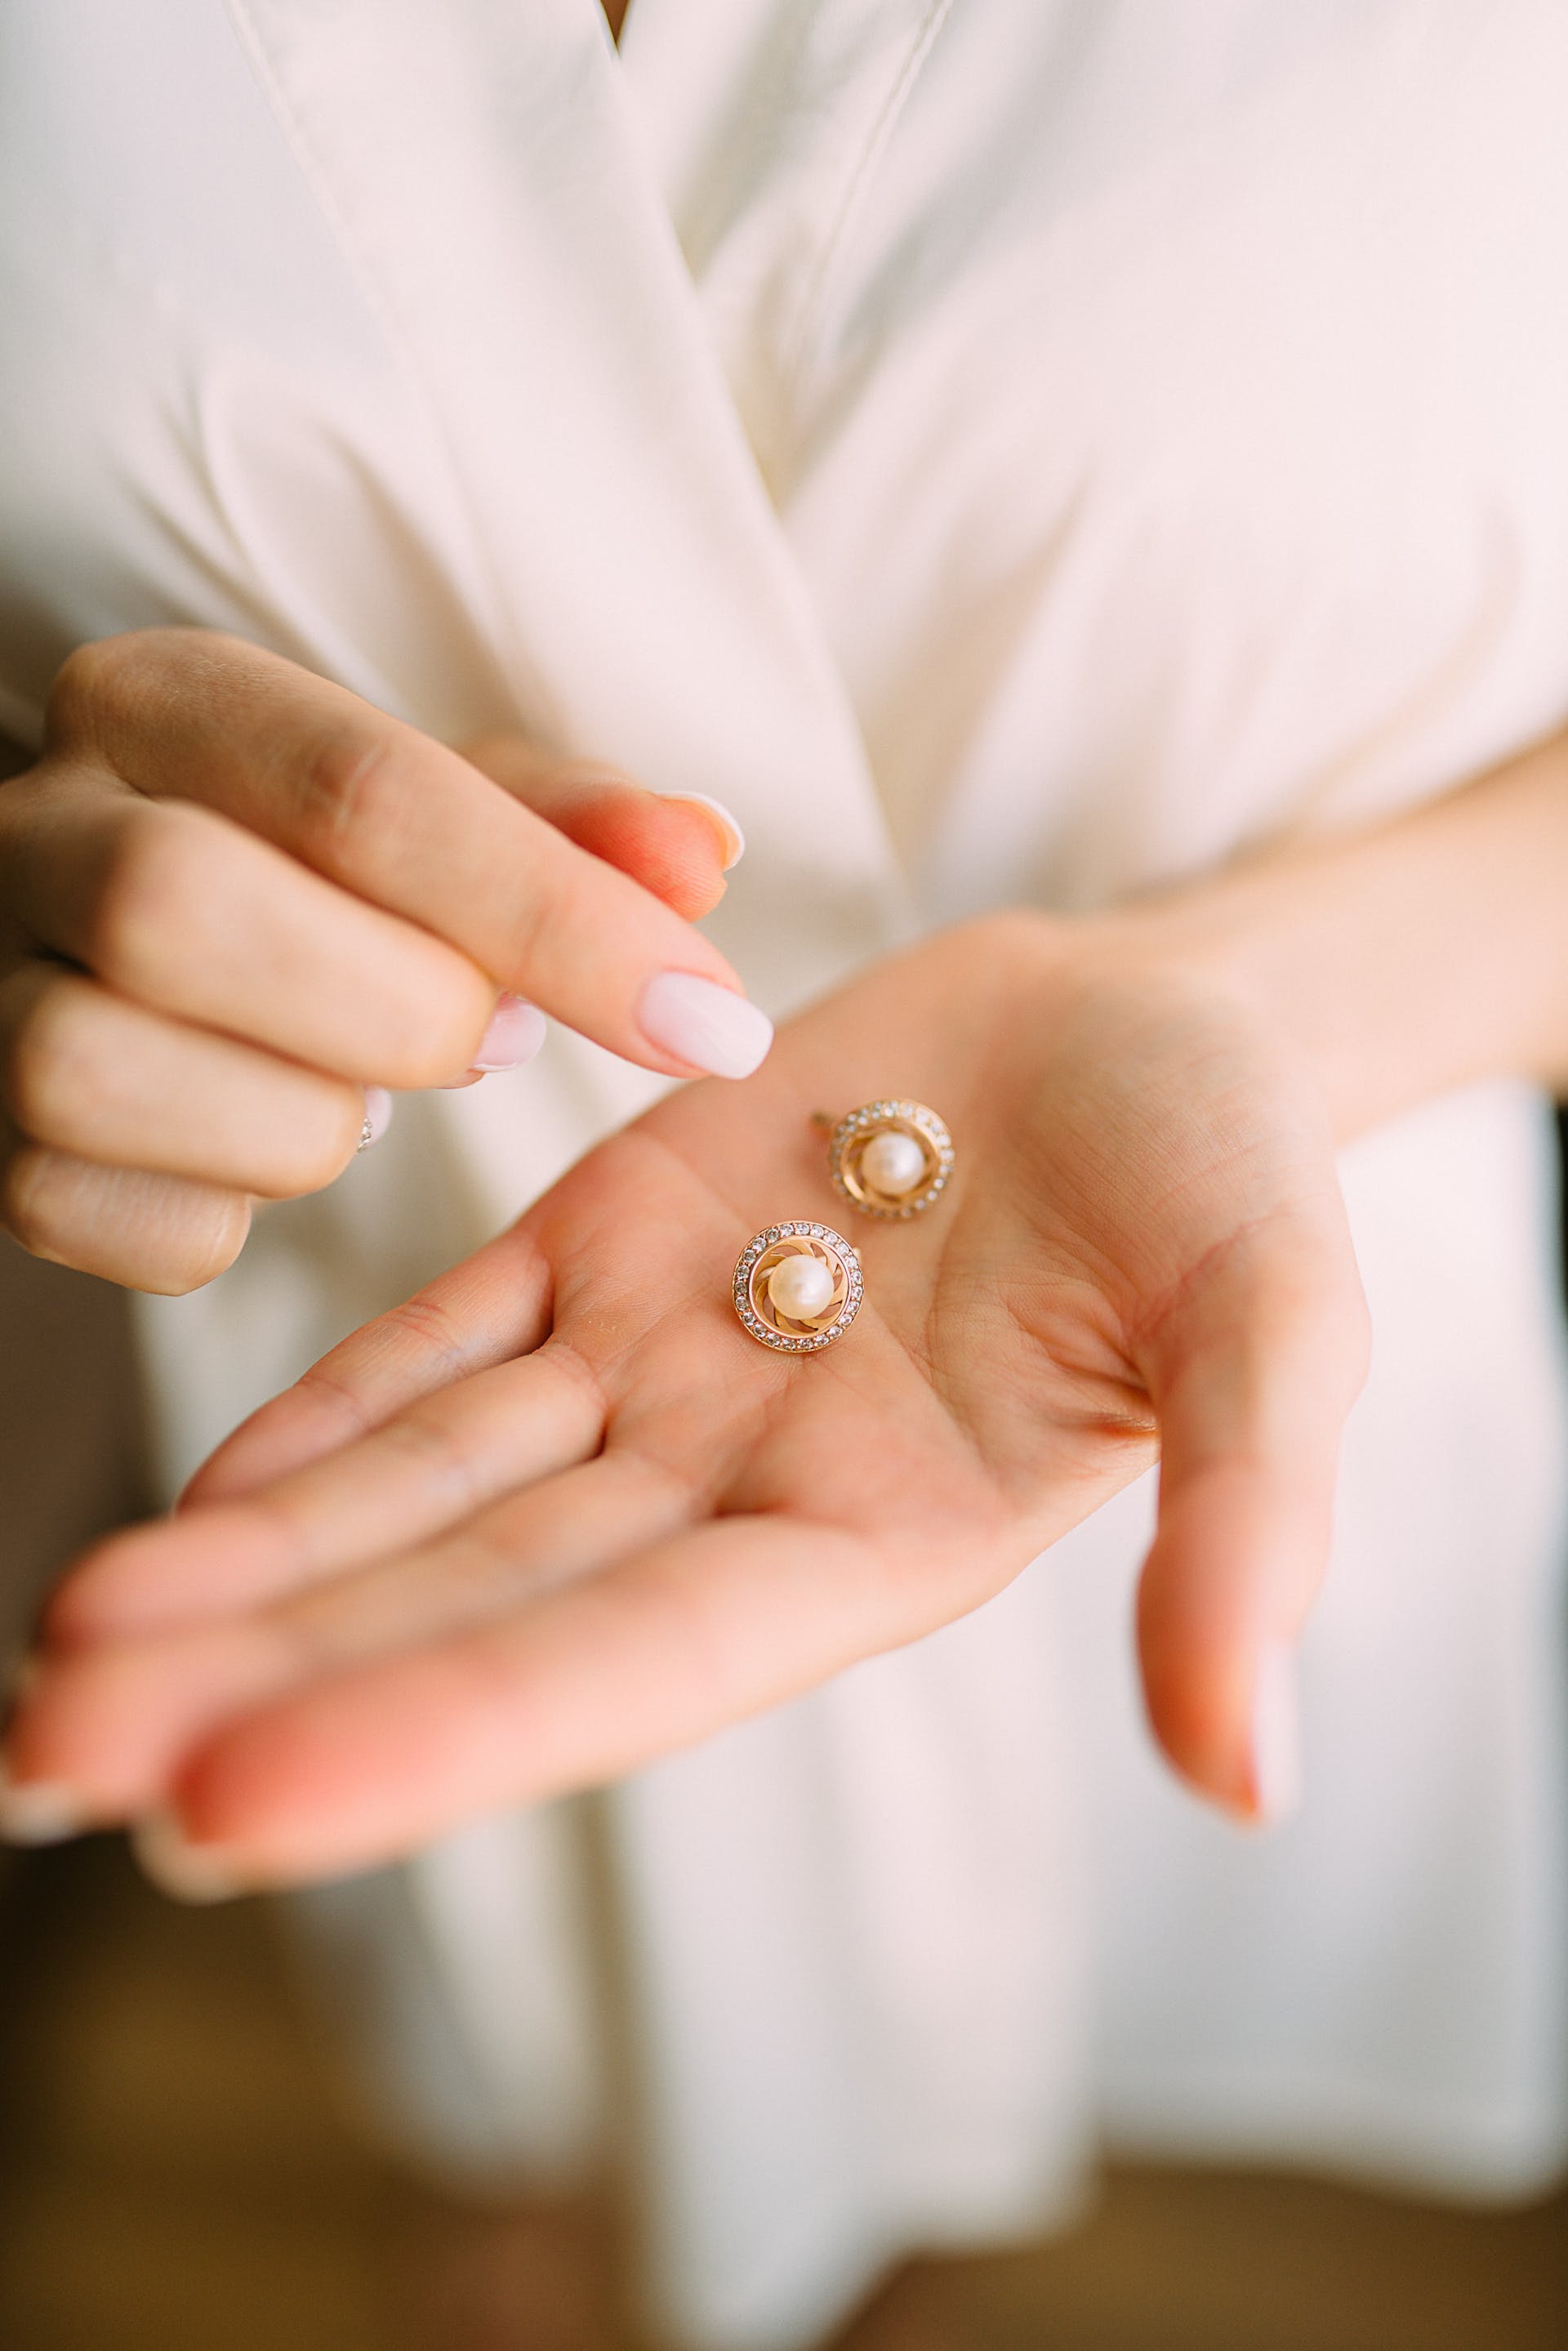 A woman holding earrings | Source: Pexels